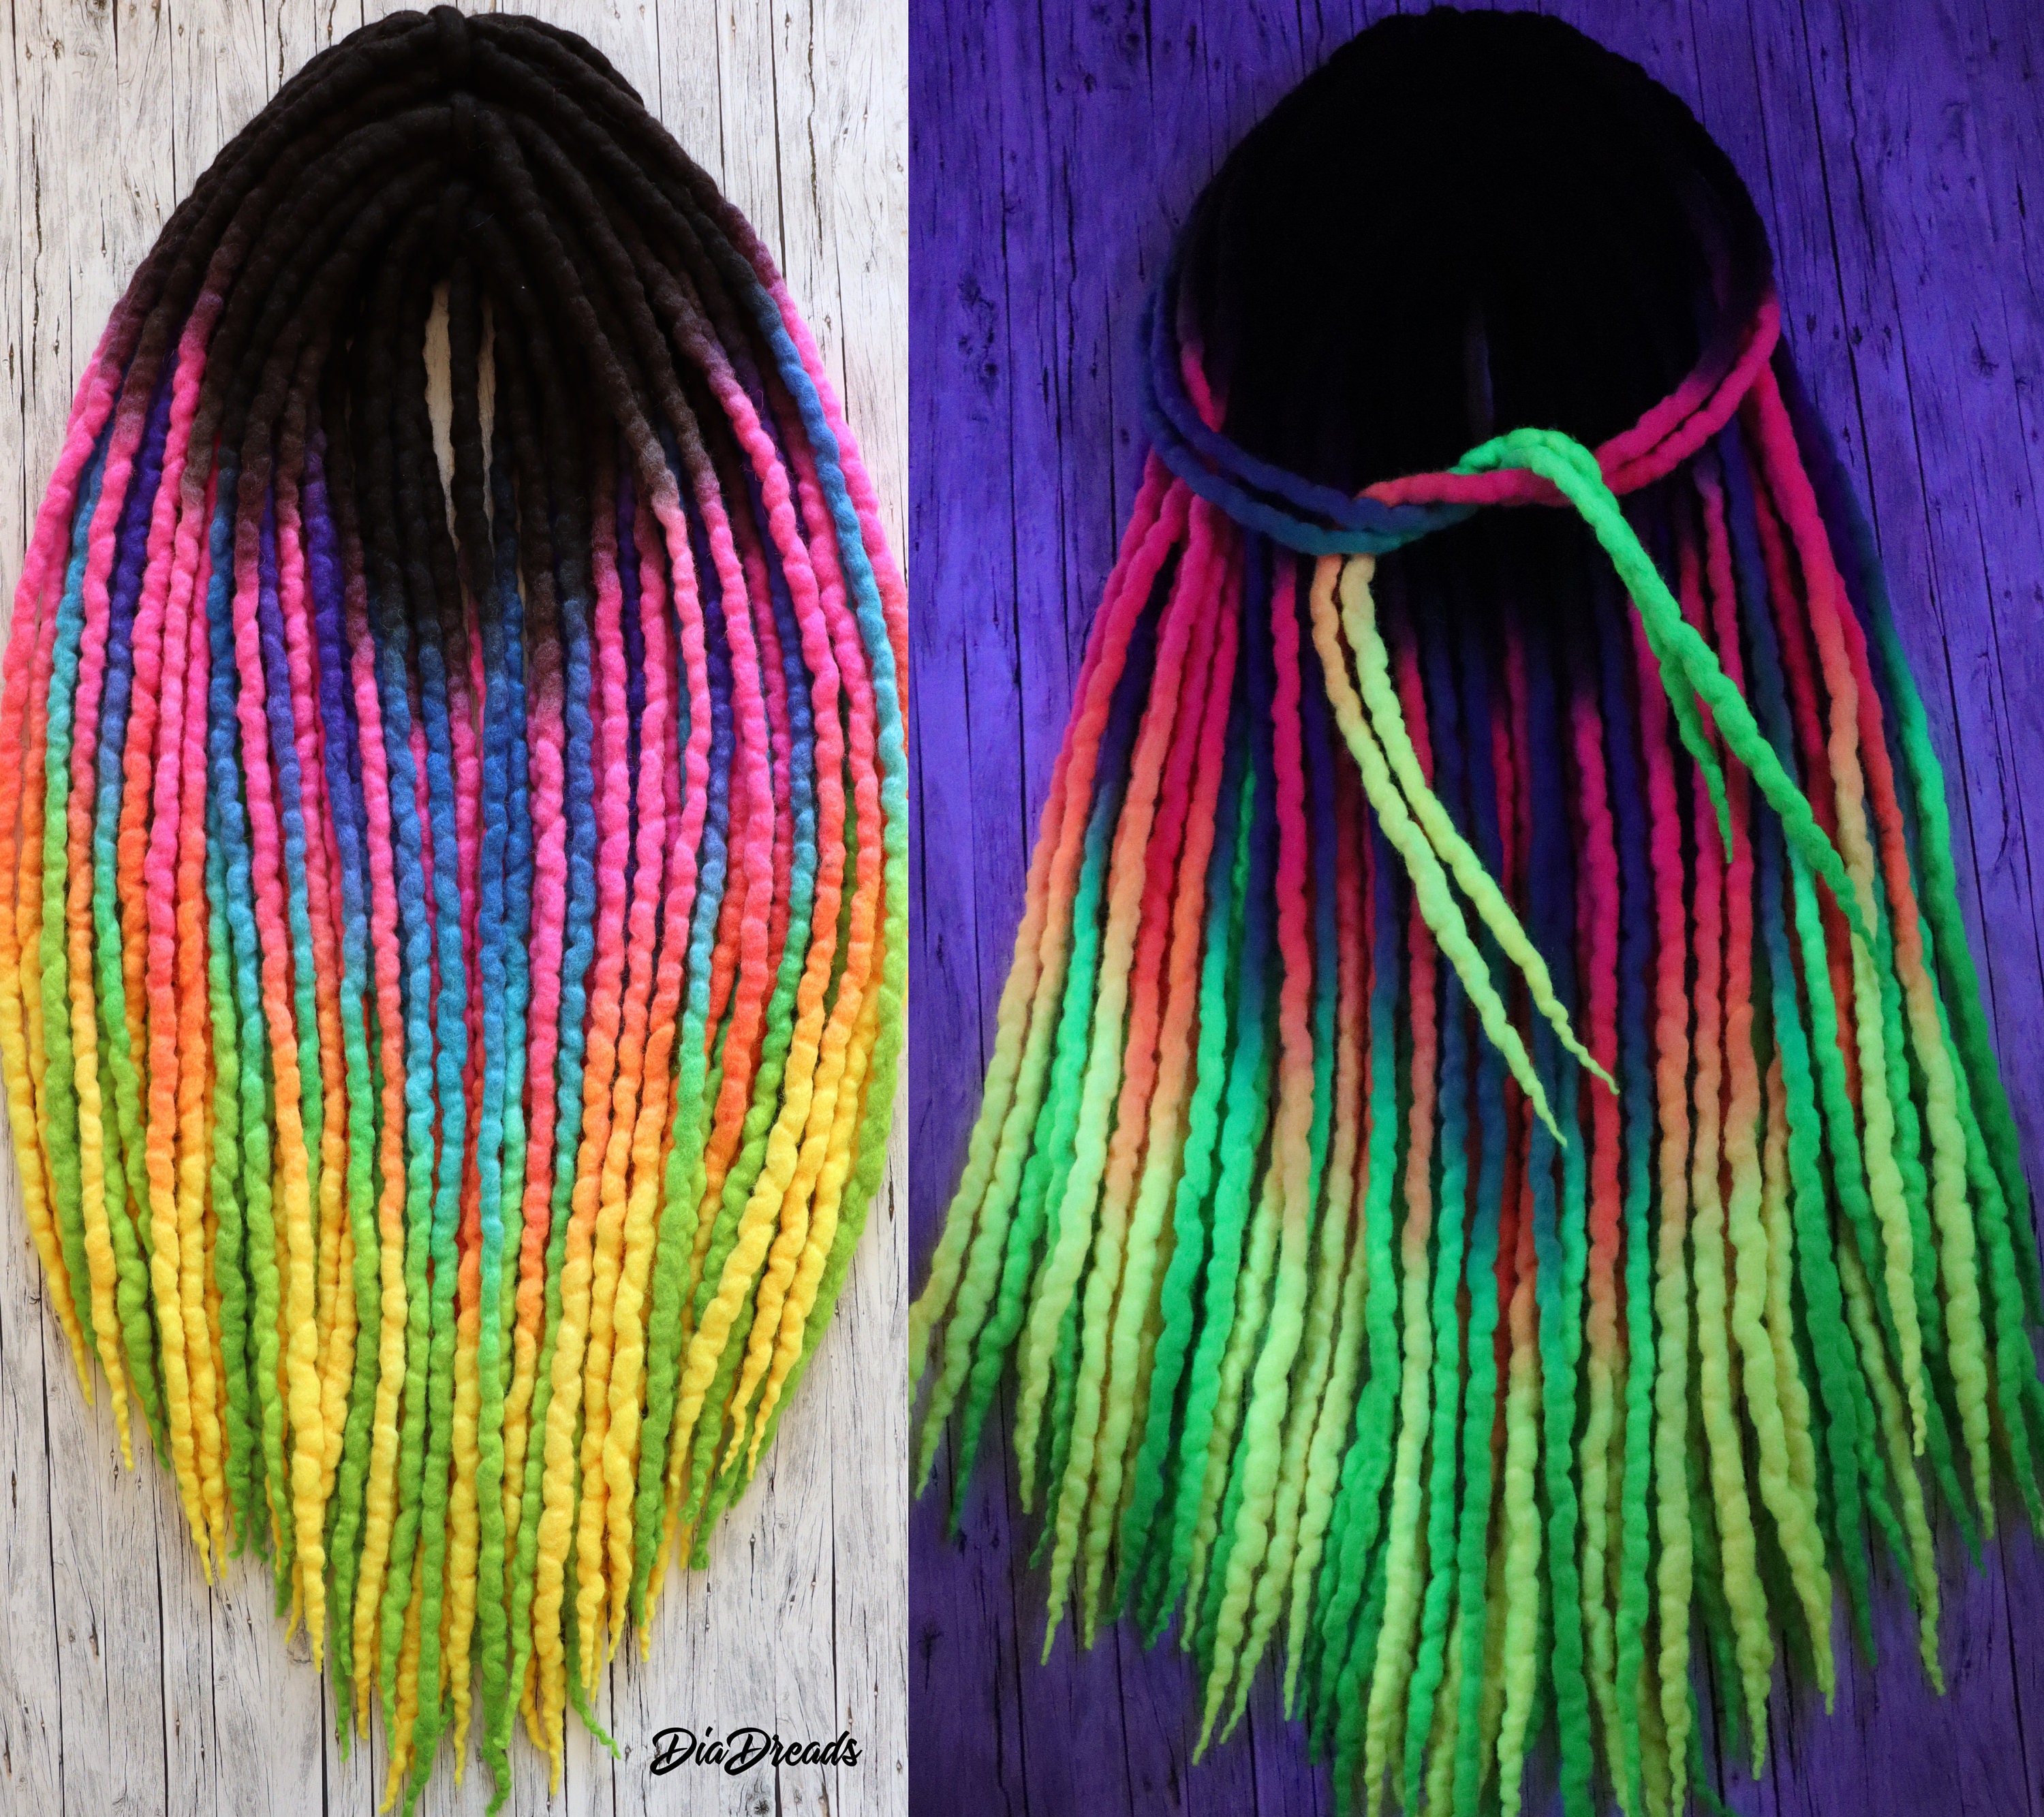  Glow In The Dark Dreadlock Loc Sprinkles Mix Hair Beads :  Handmade Products